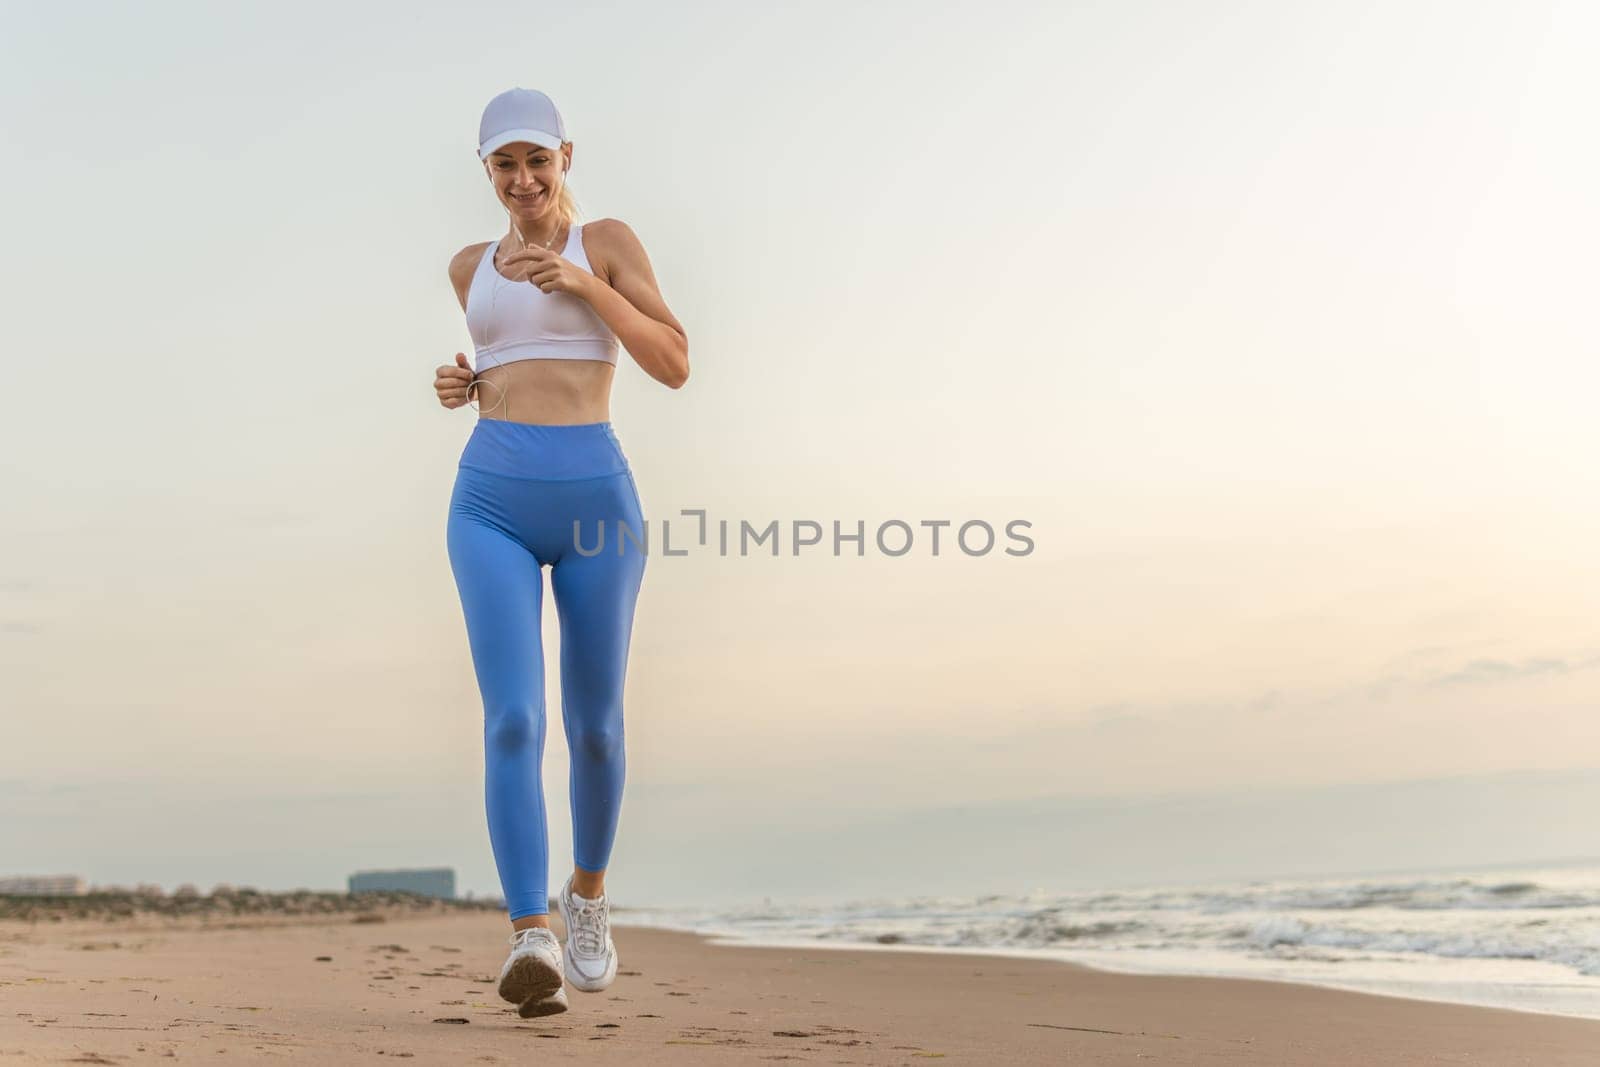 sportive woman running along beautiful sandy beach, healthy lifestyle, enjoying active summer vacation near the sea. High quality photo